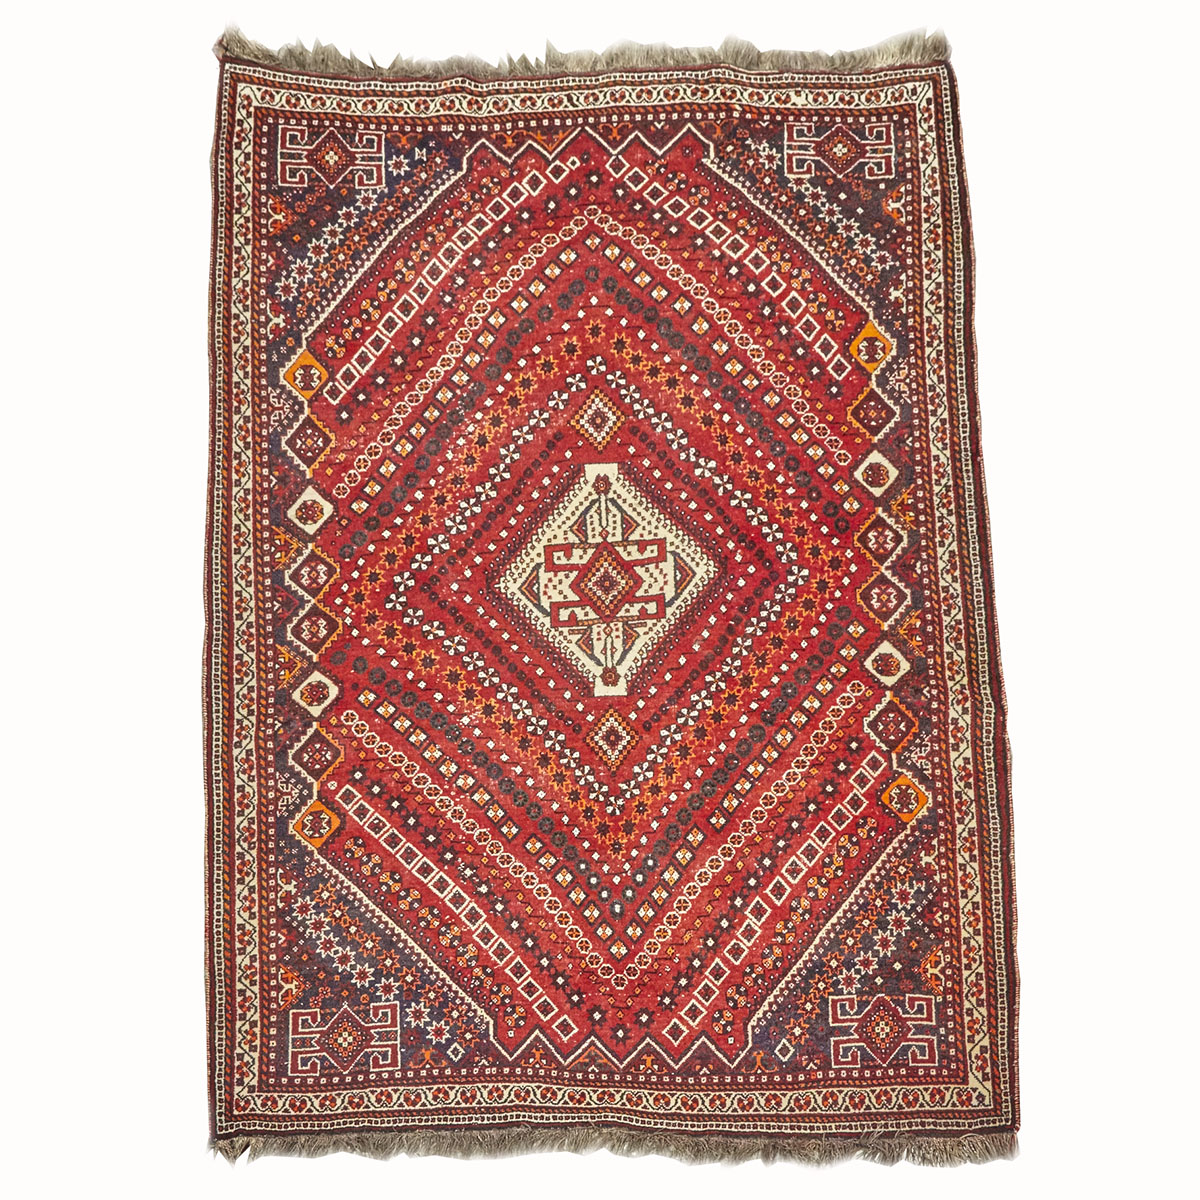 Shiraz Carpet, middle 20th century, Persian